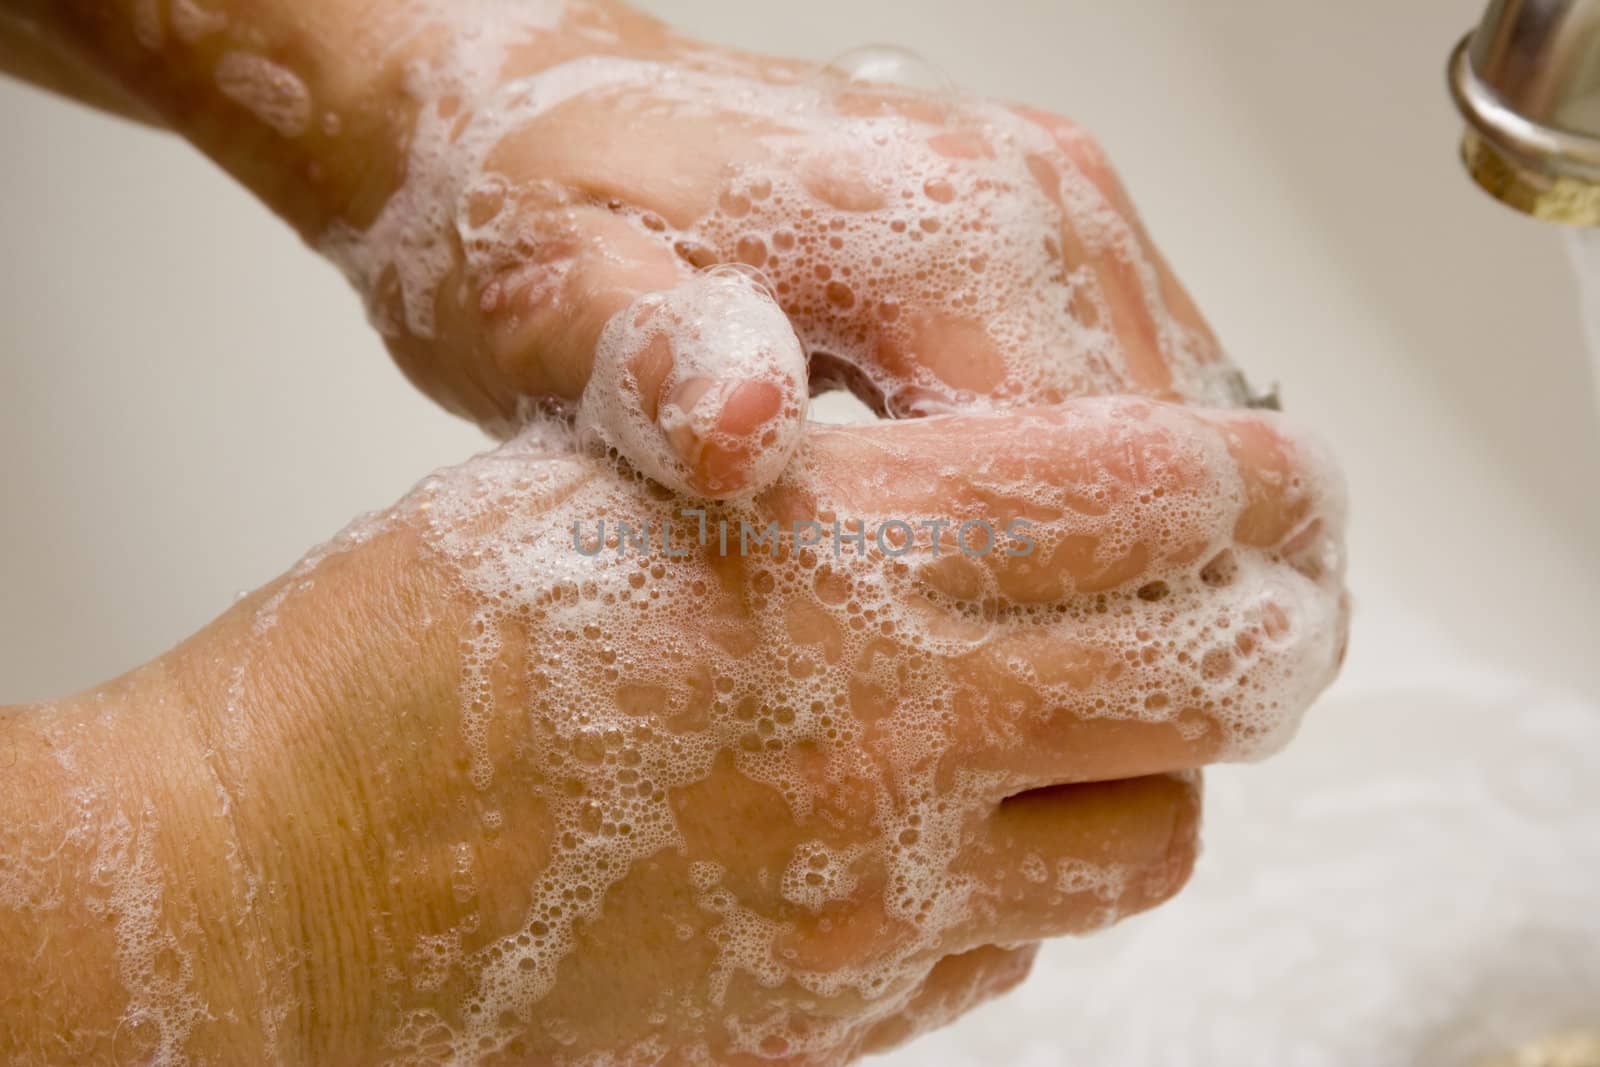 clean hands by snokid